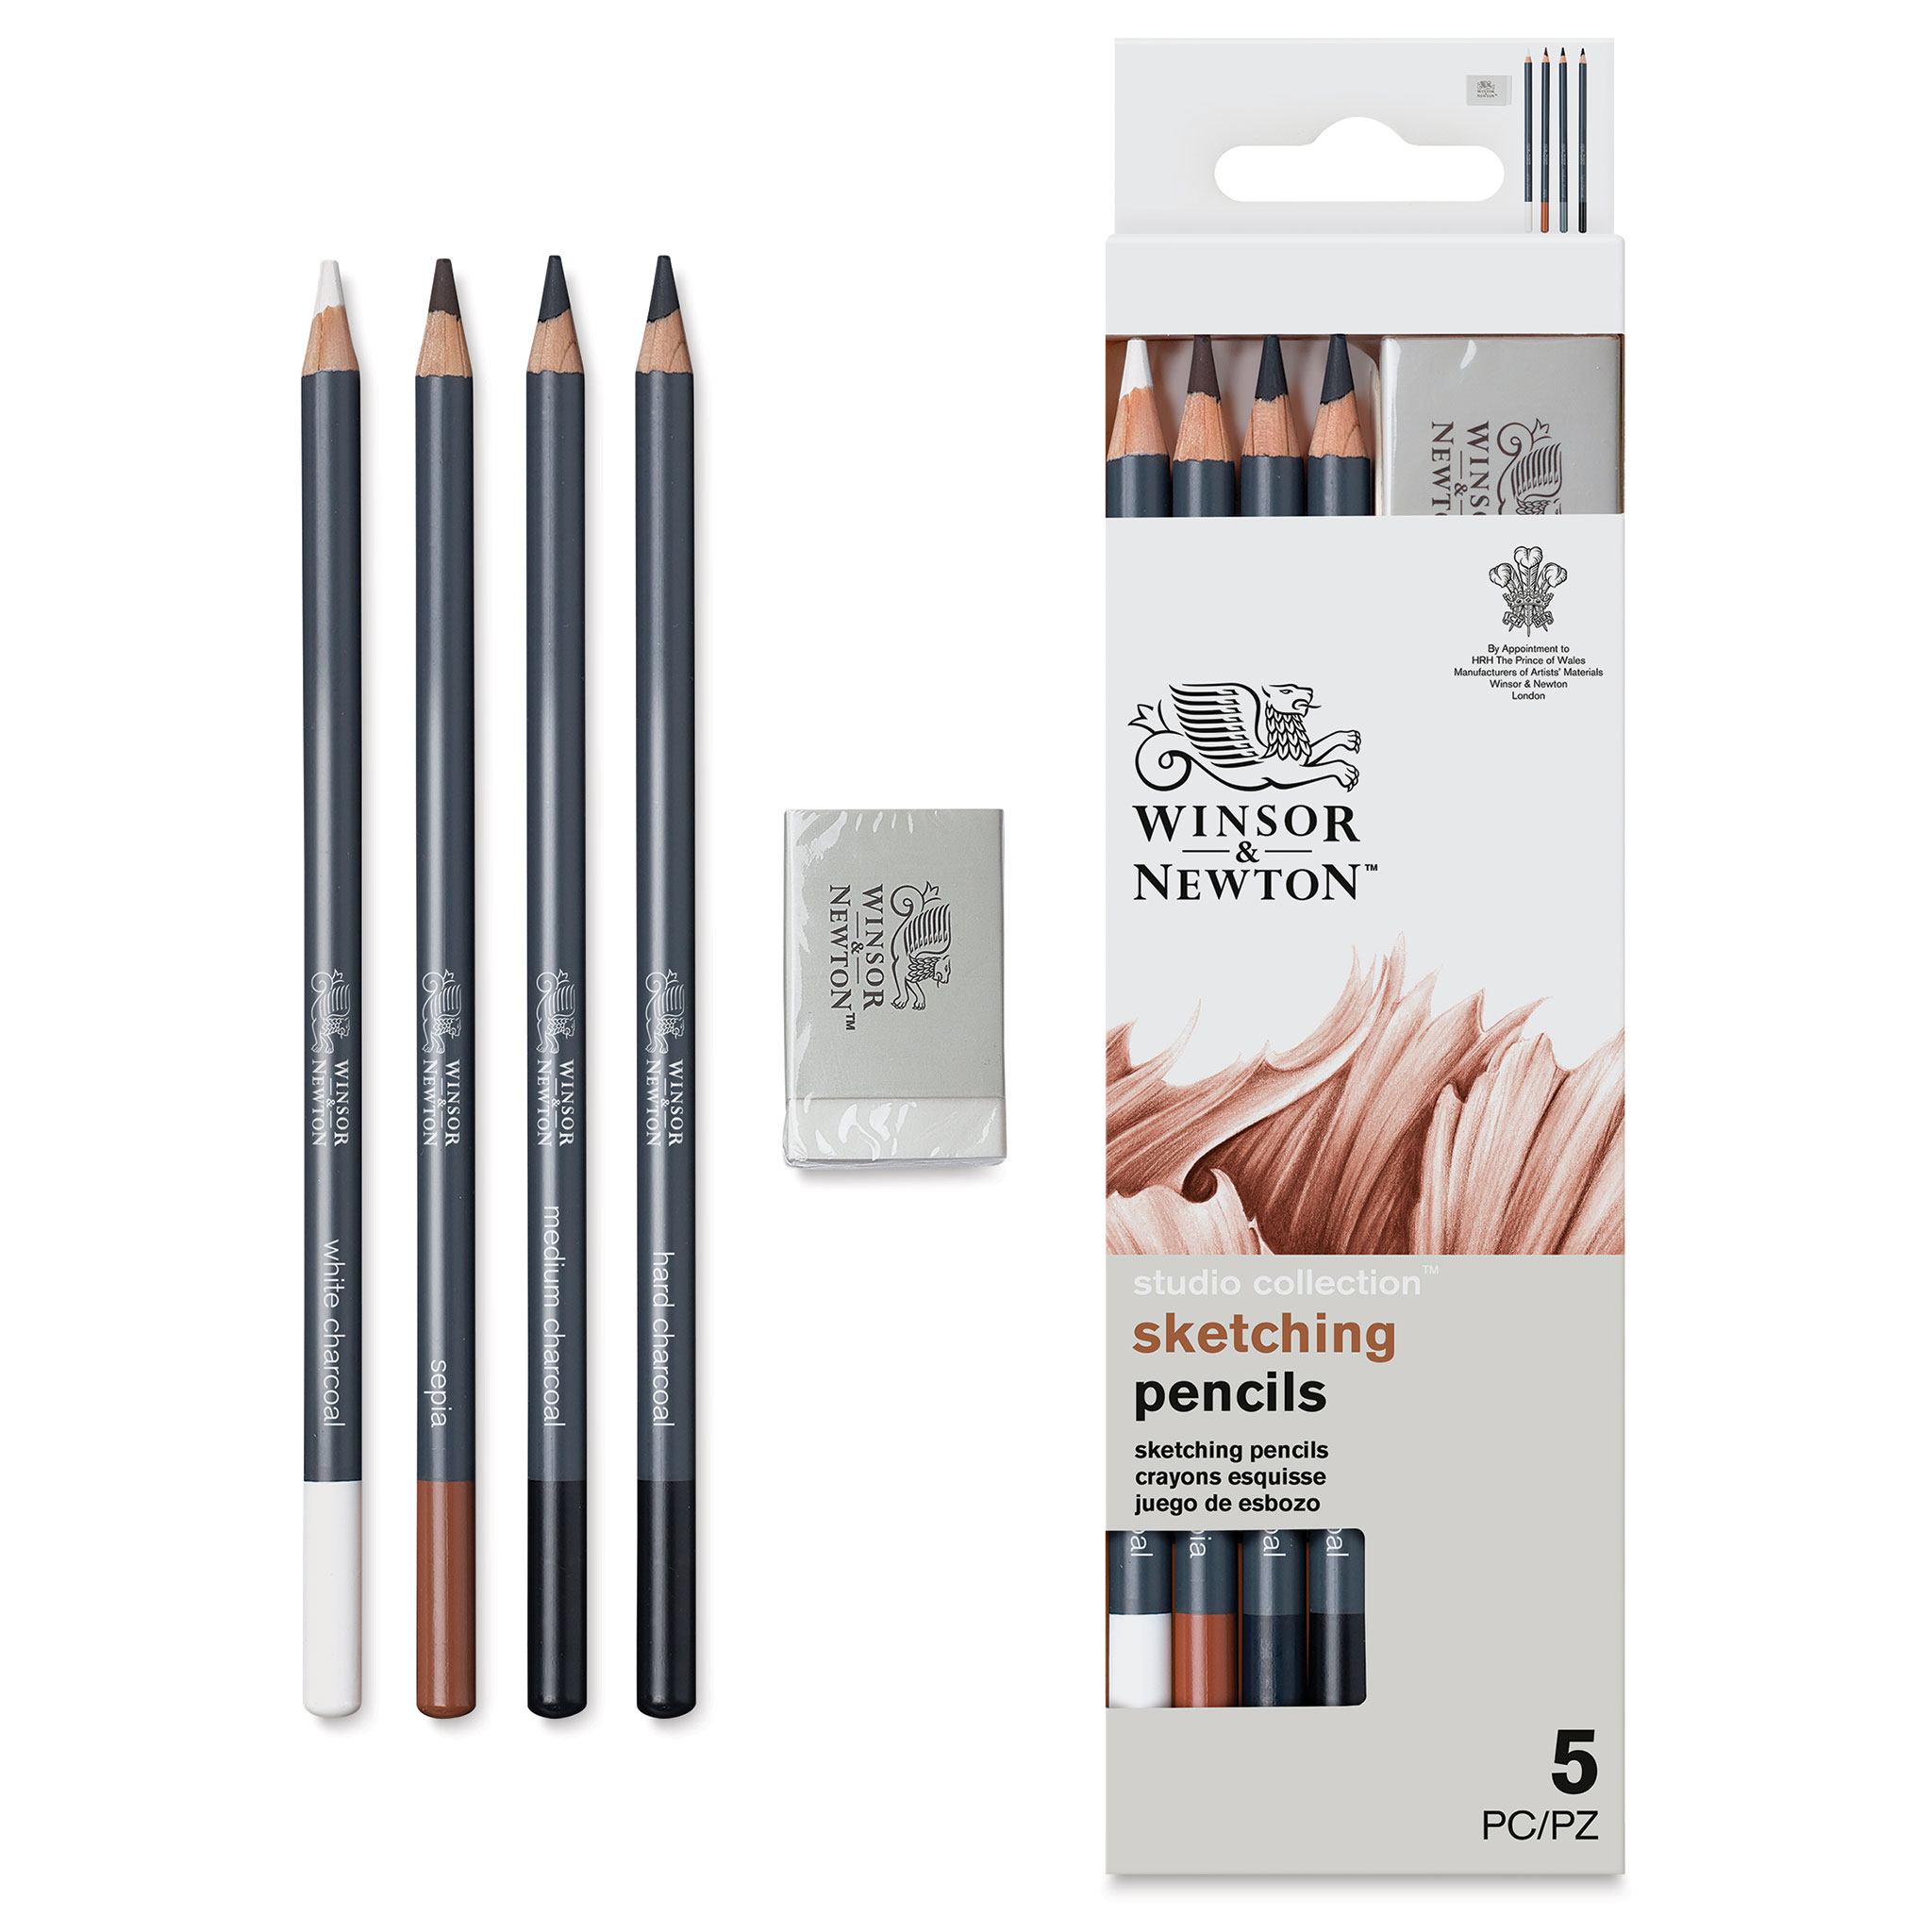 Winsor & Newton Studio Collection Sketching Pencils - Set of 5